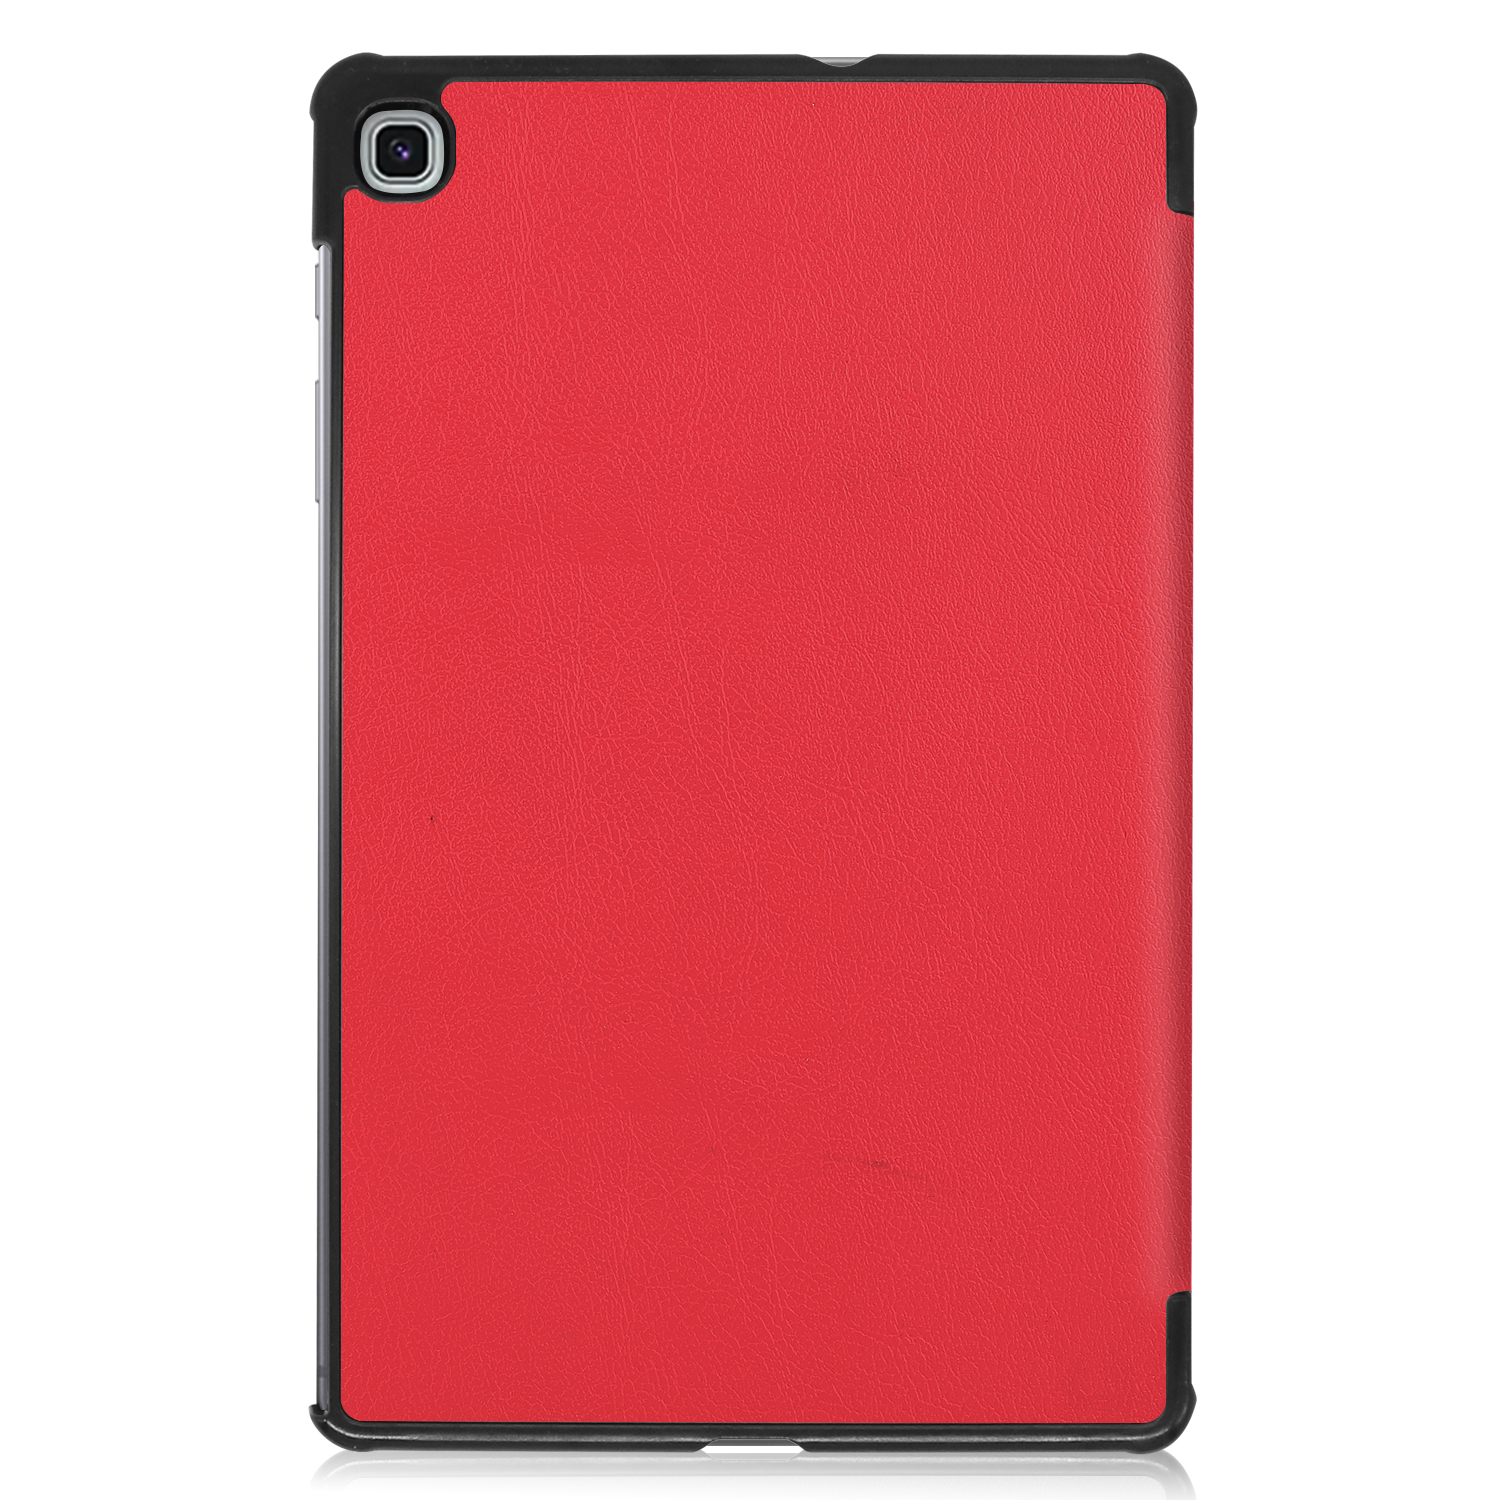 Läderfodral, Samsung Galaxy Tab S6 Lite 10.4, röd